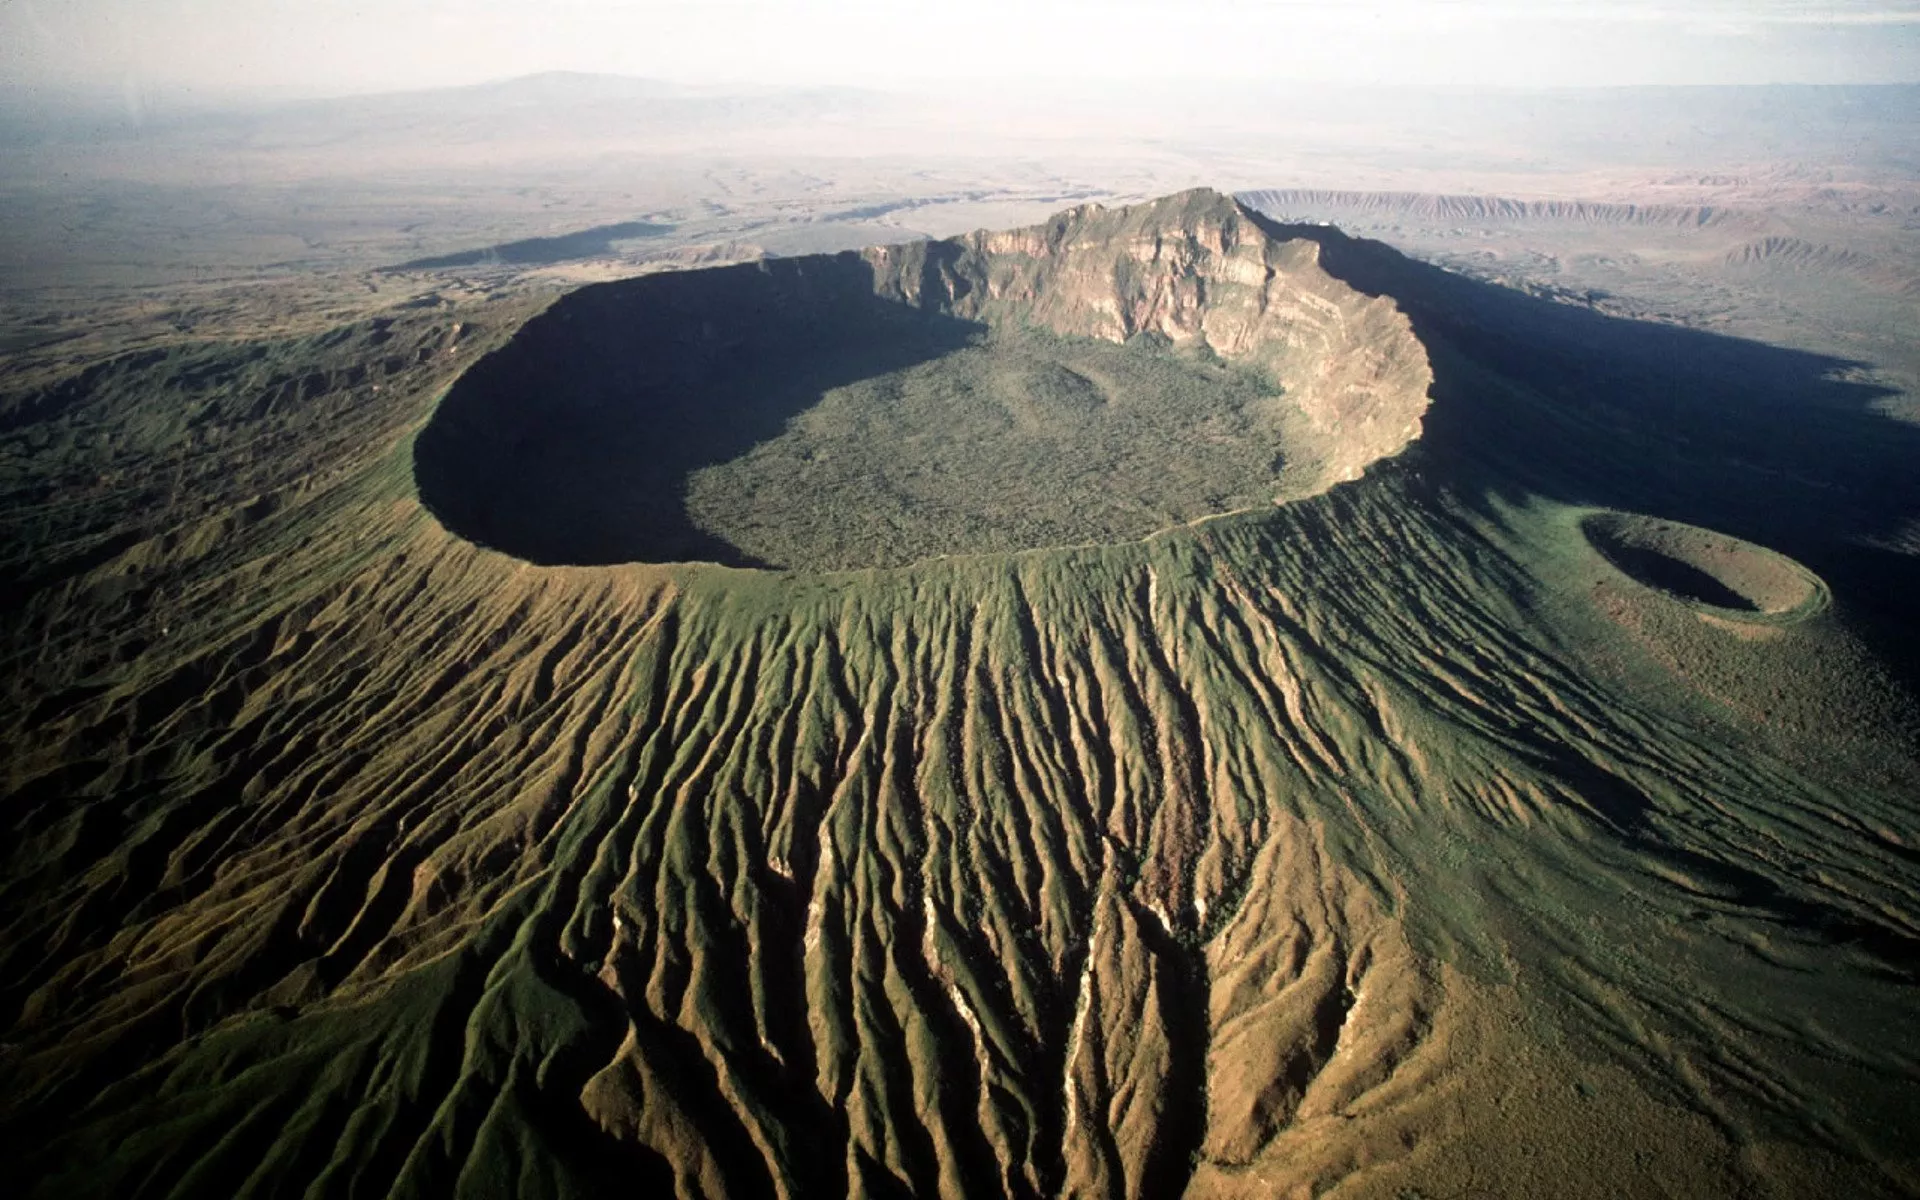 Menengai Crater Hiking Trail in Kenya, Africa | Trekking & Hiking - Rated 3.5